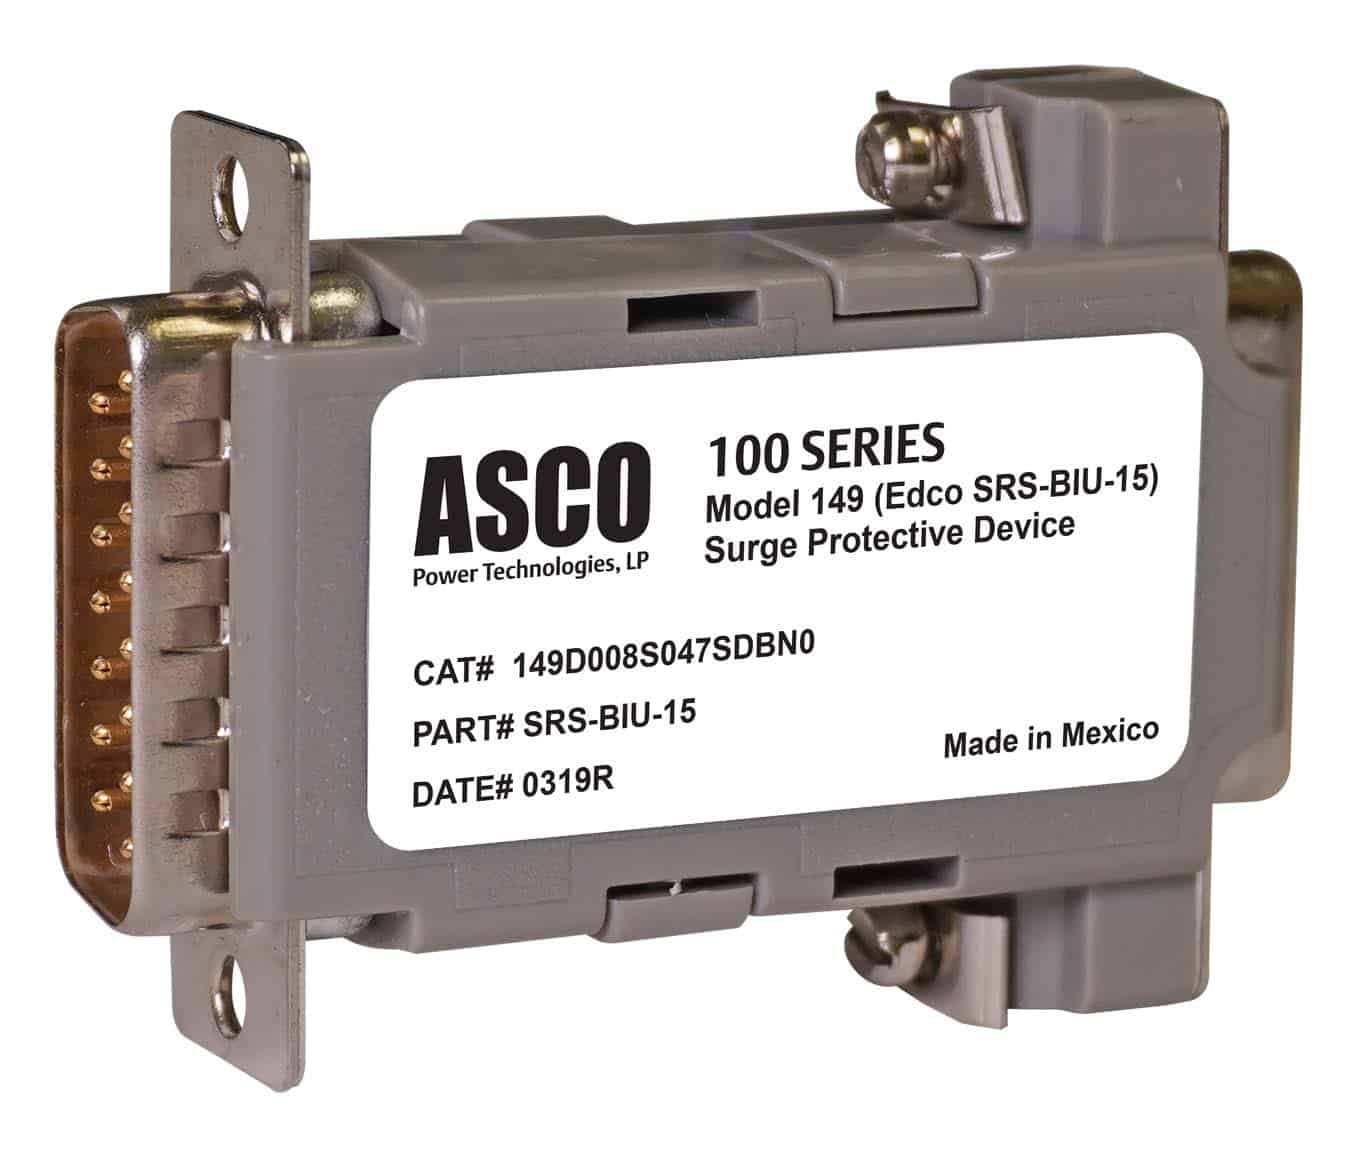 ASCO 100 Series – Model 149 (Edco SRS-BIU-15)